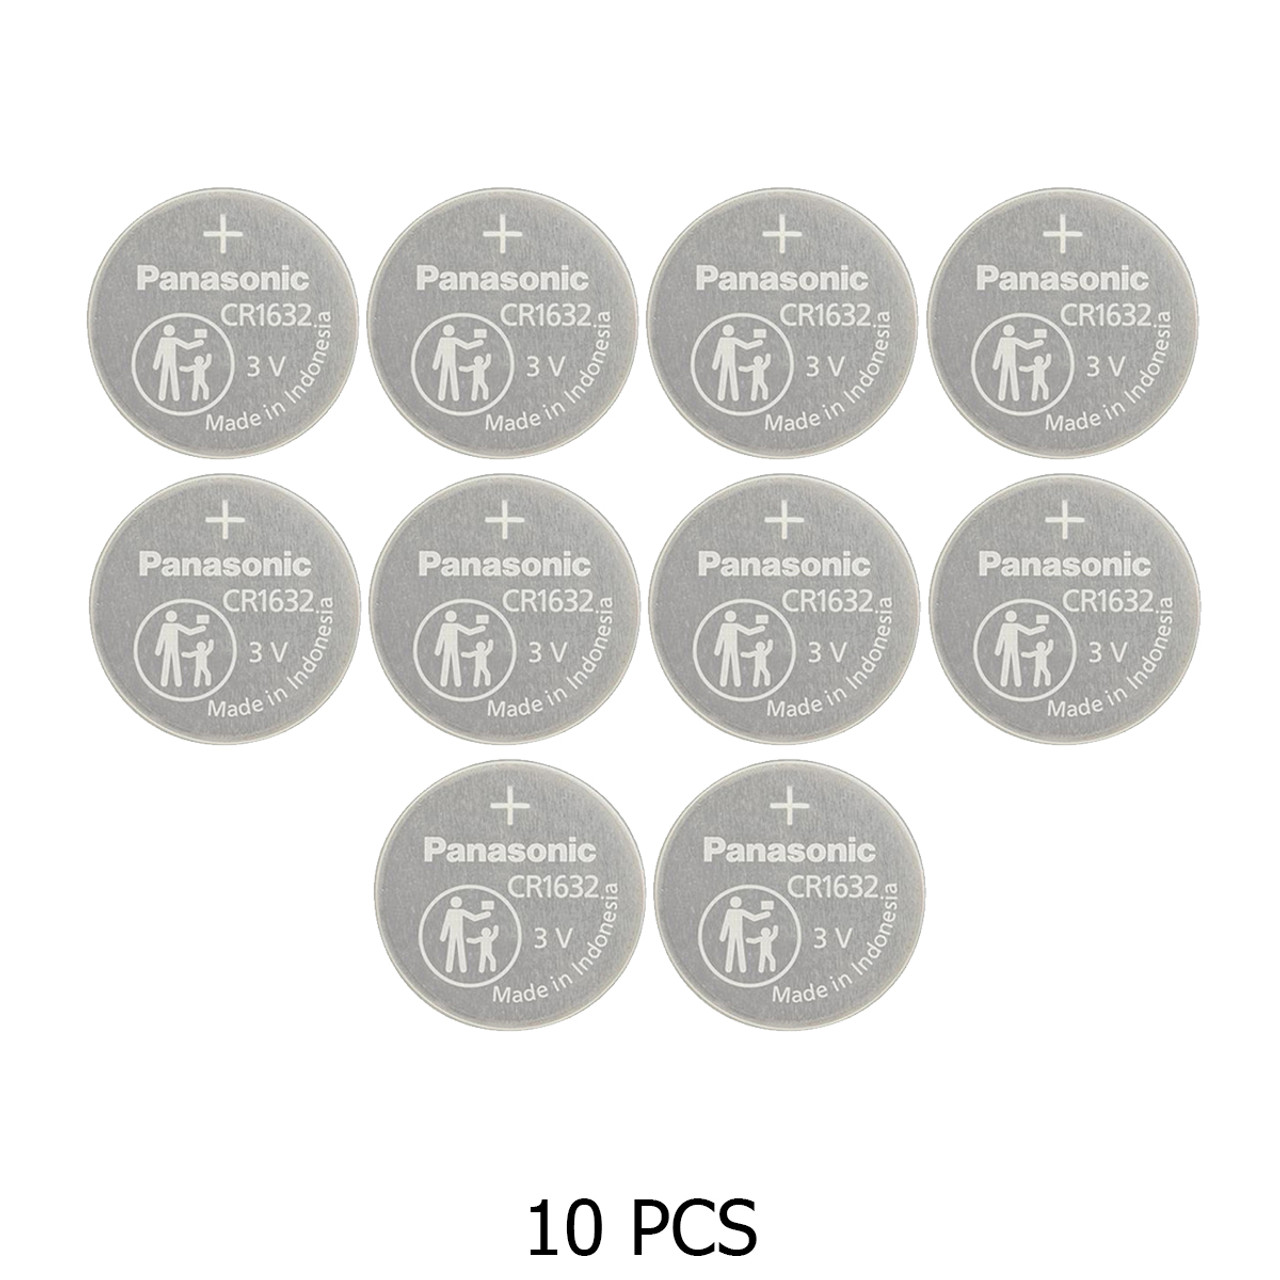 Panasonic CR1632-6 CR1632 3V Lithium Coin Battery (Pack of 6)